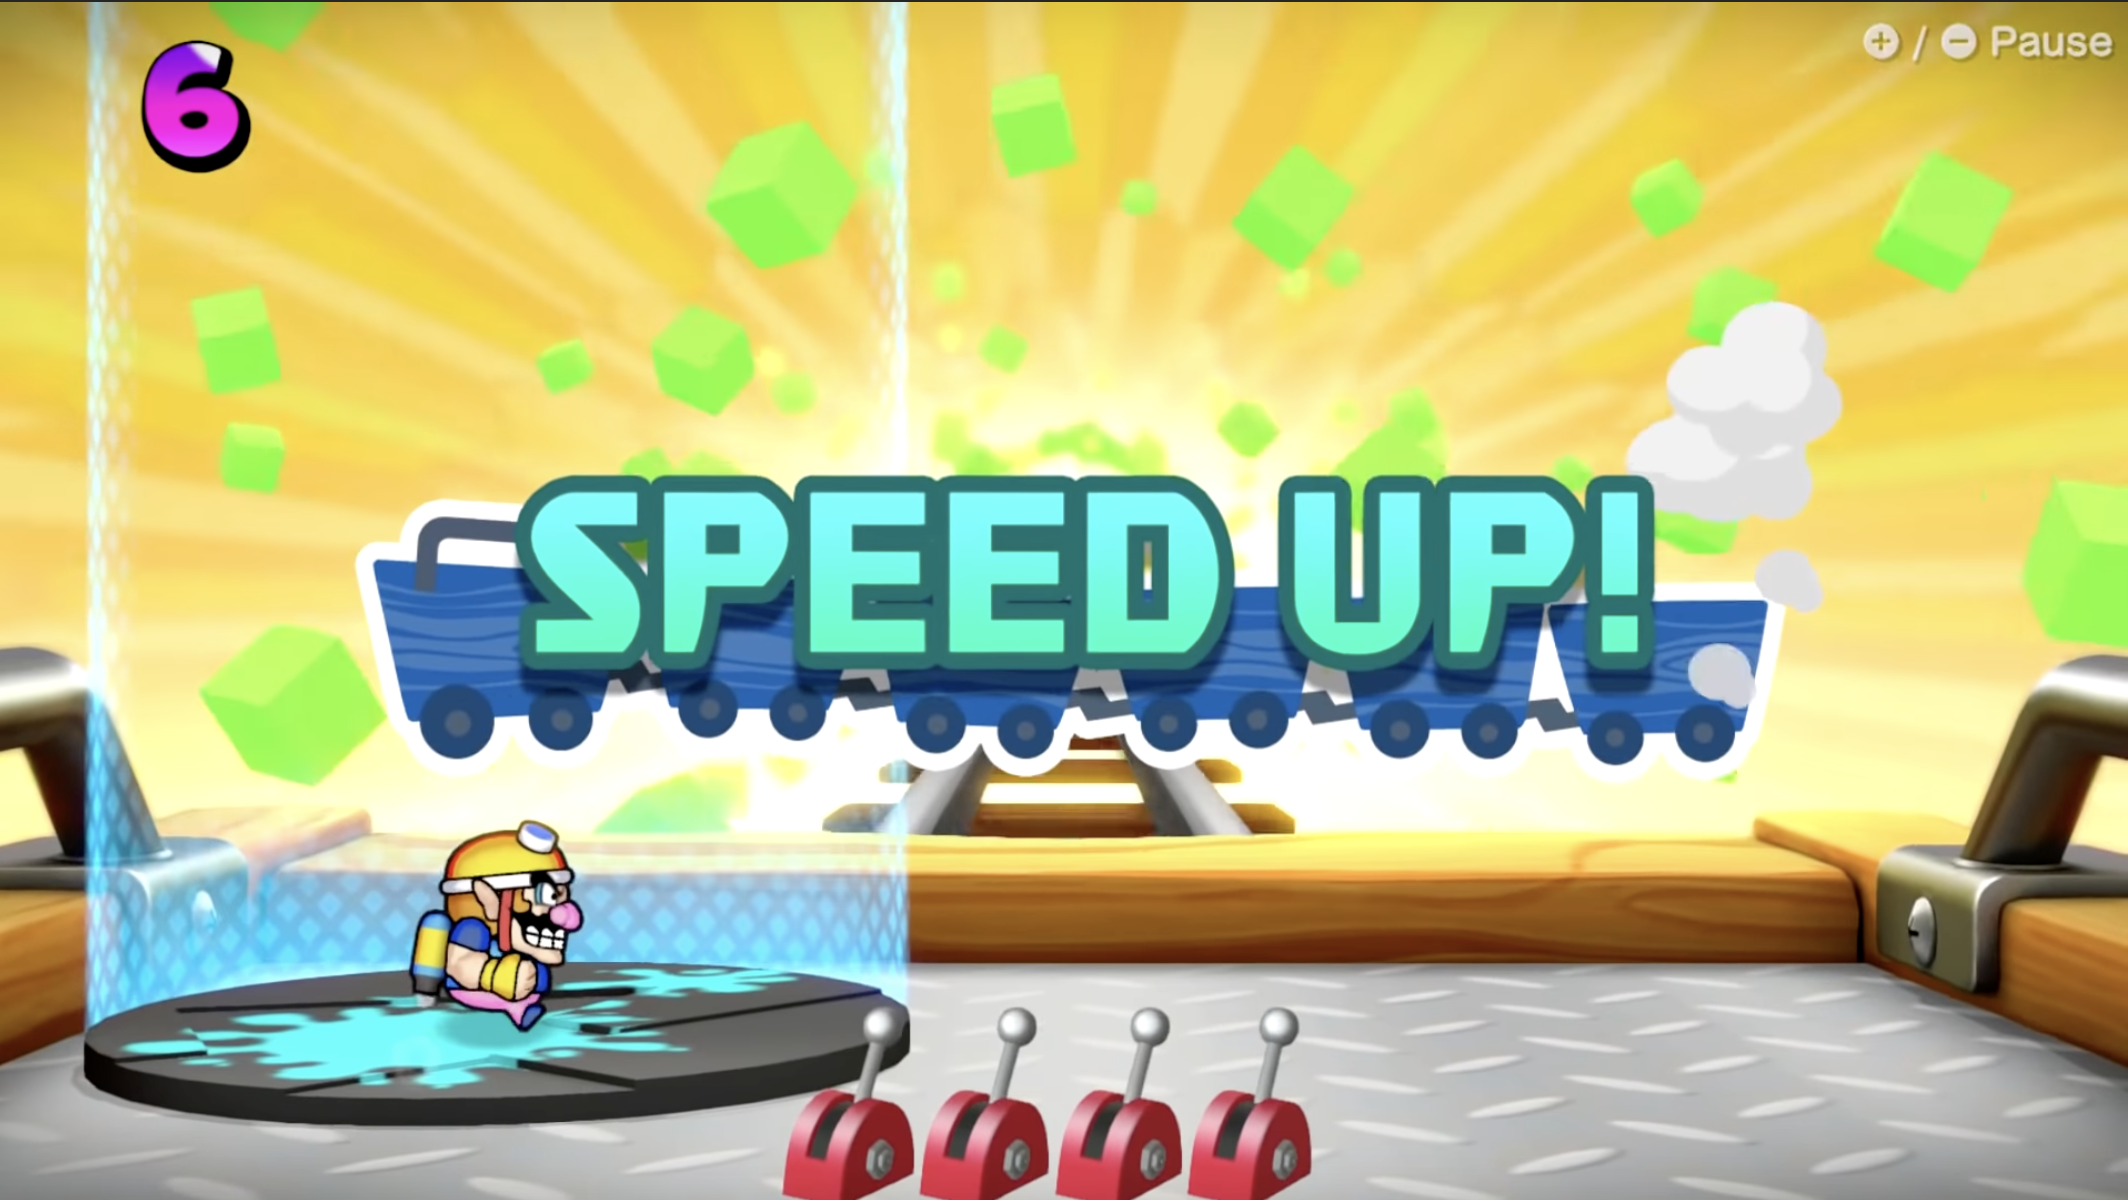 Remix Speed Up in WarioWare: Get It Together!